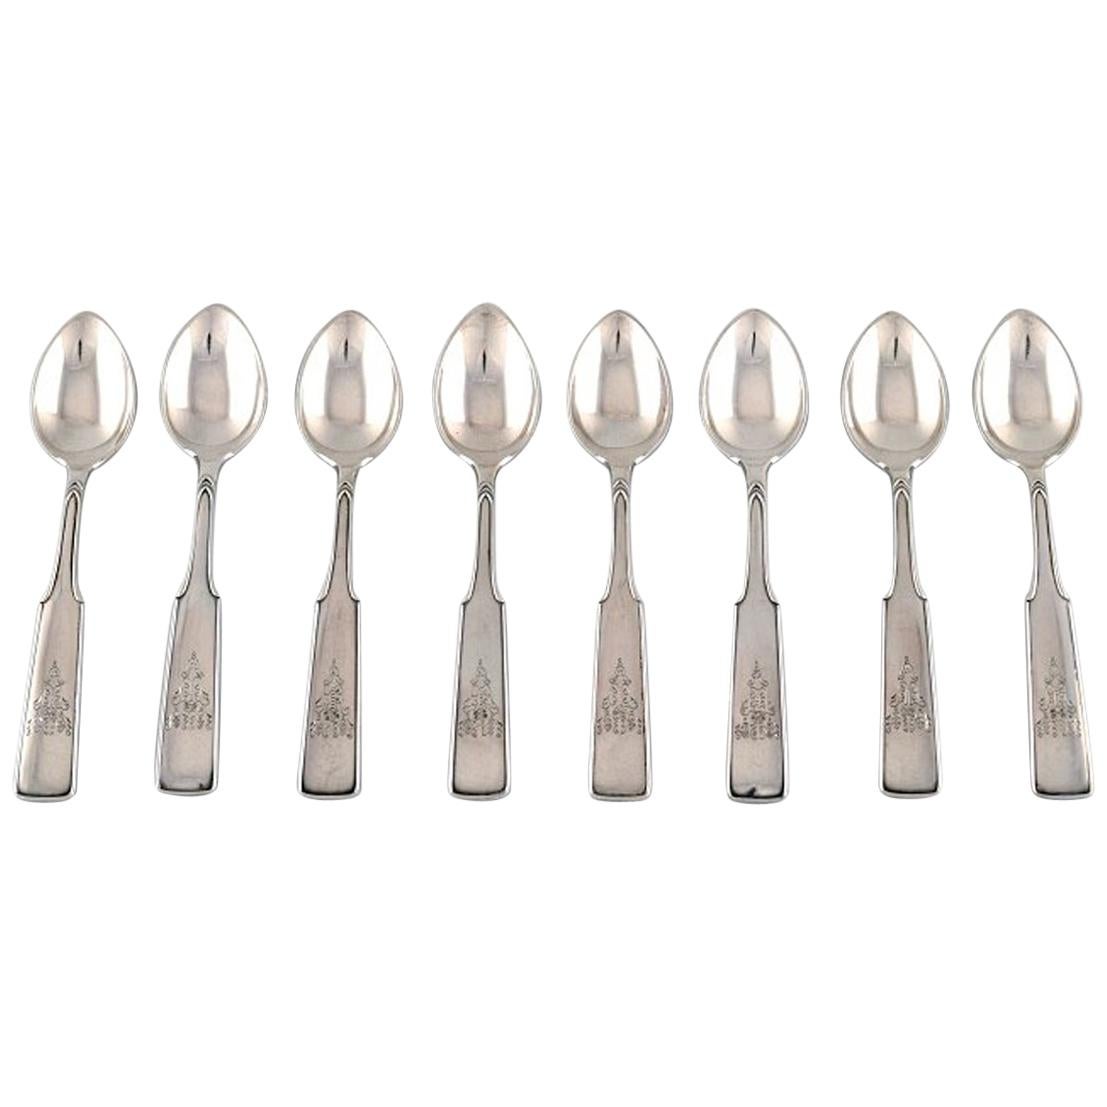 Hans Hansen Silverware Number 2, Set of 8 Coffee Spoons in All Silver, 1937